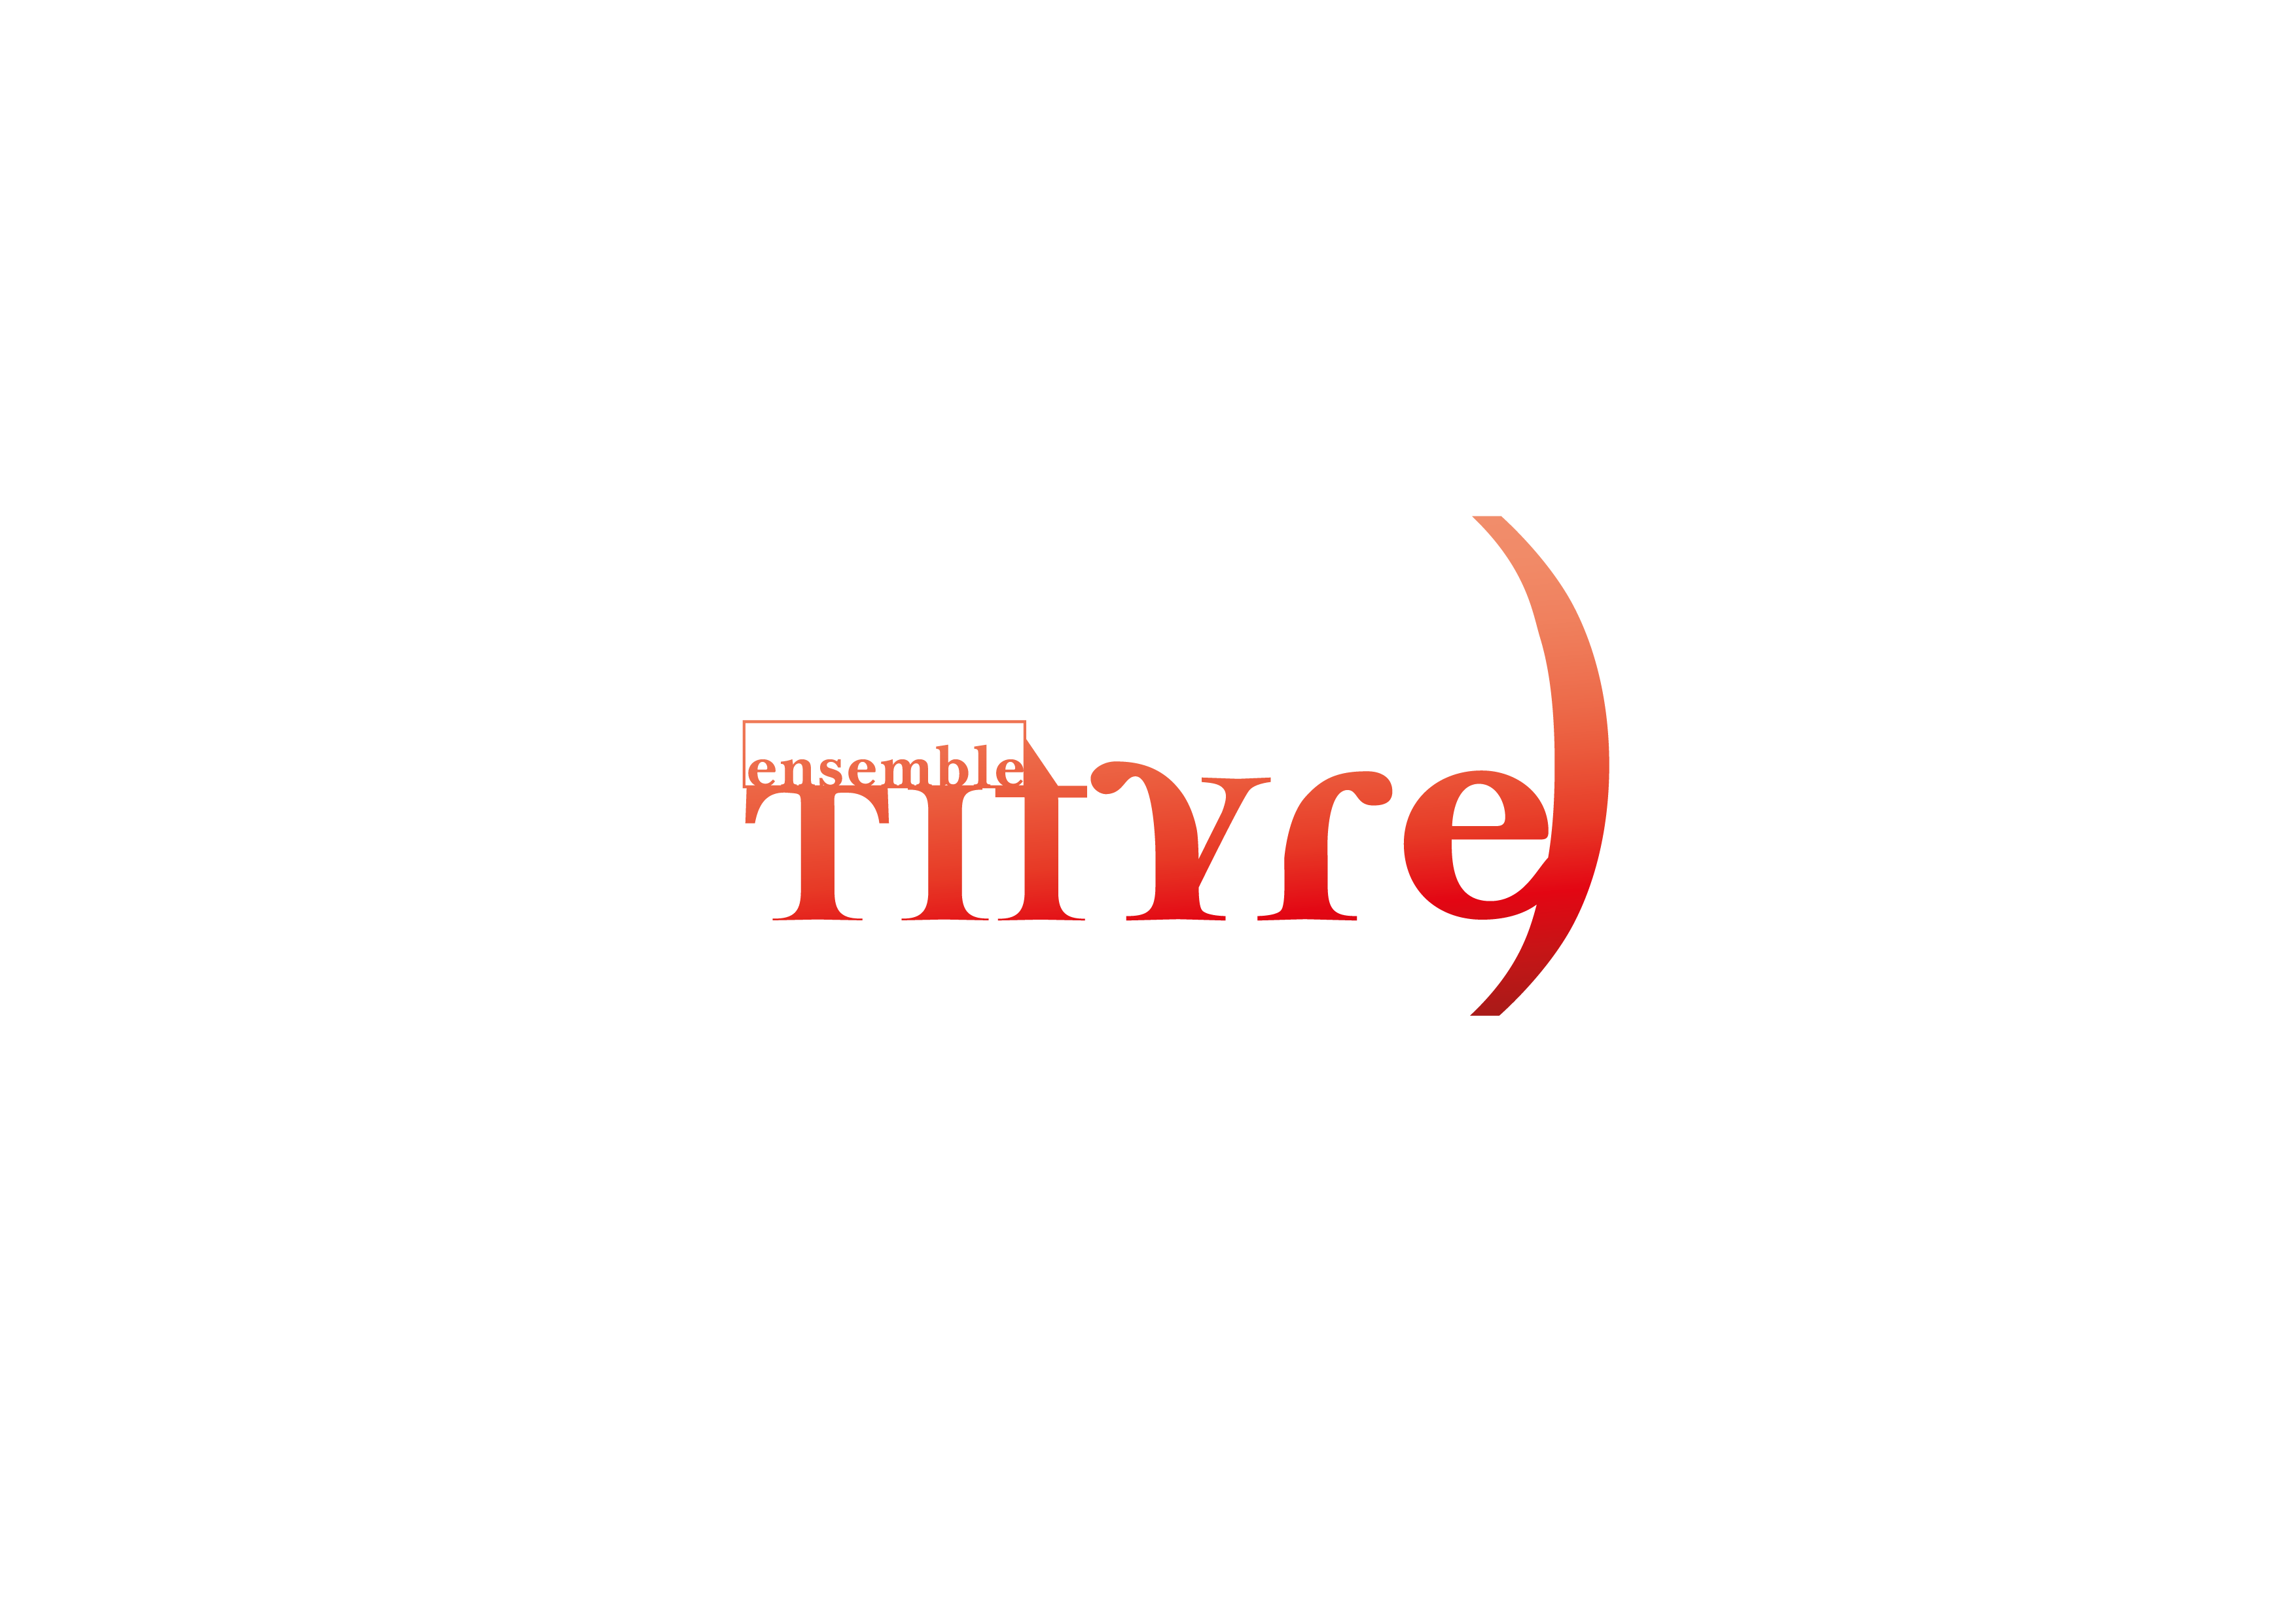 Logo ensemble Tityre Orange-Verlauf